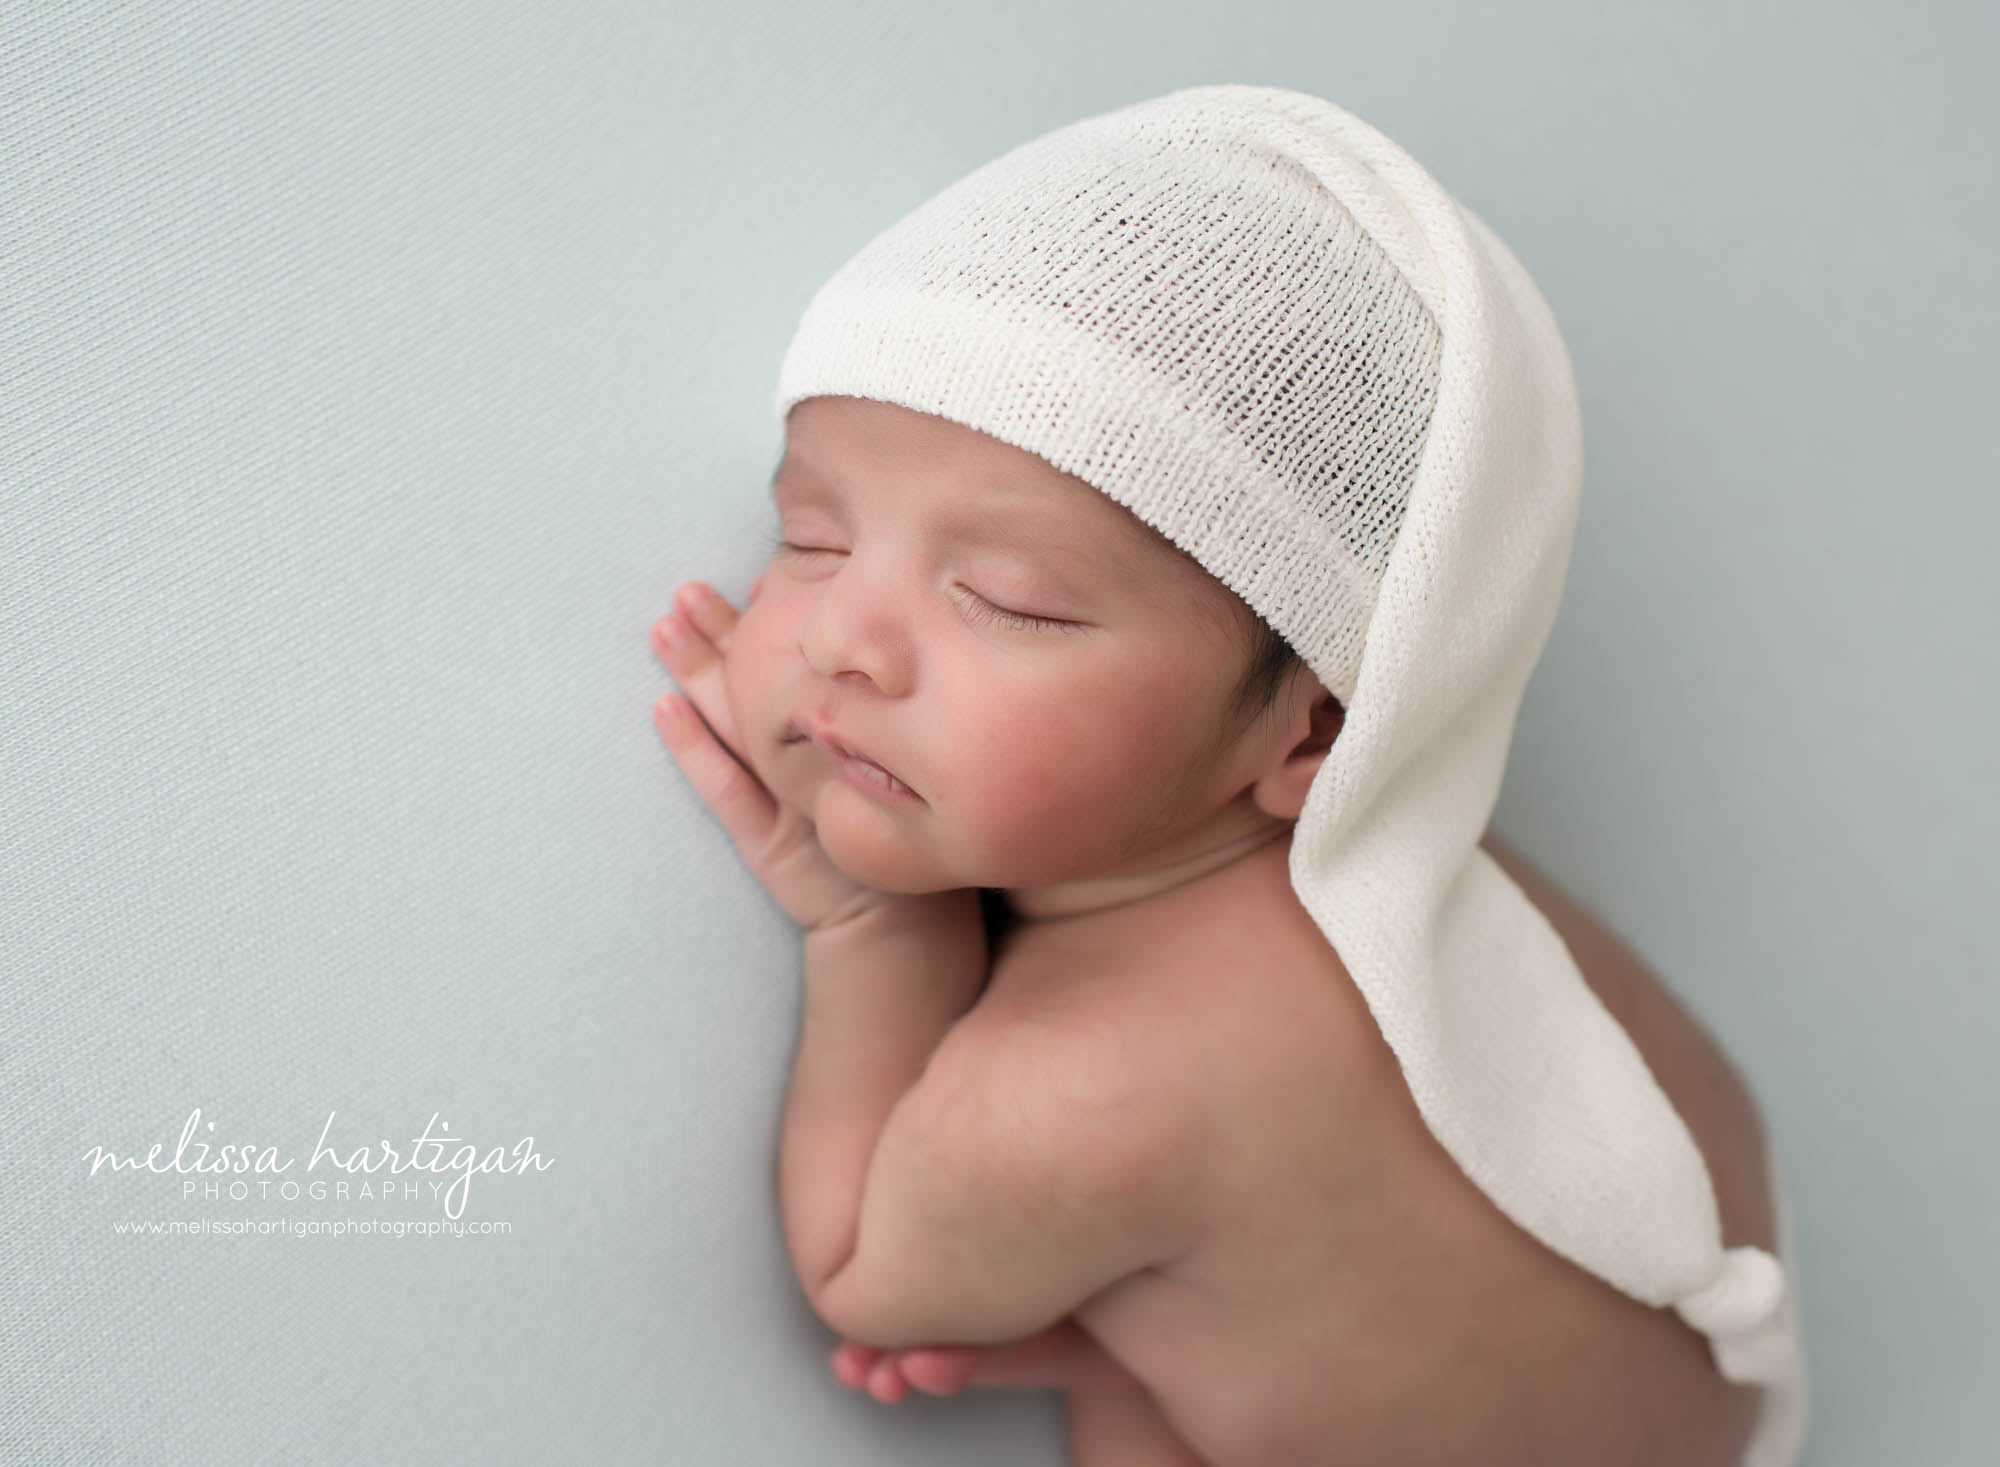 newborn baby boy posed on tummy with hand under cheek wearing cream knitted sleepy cap